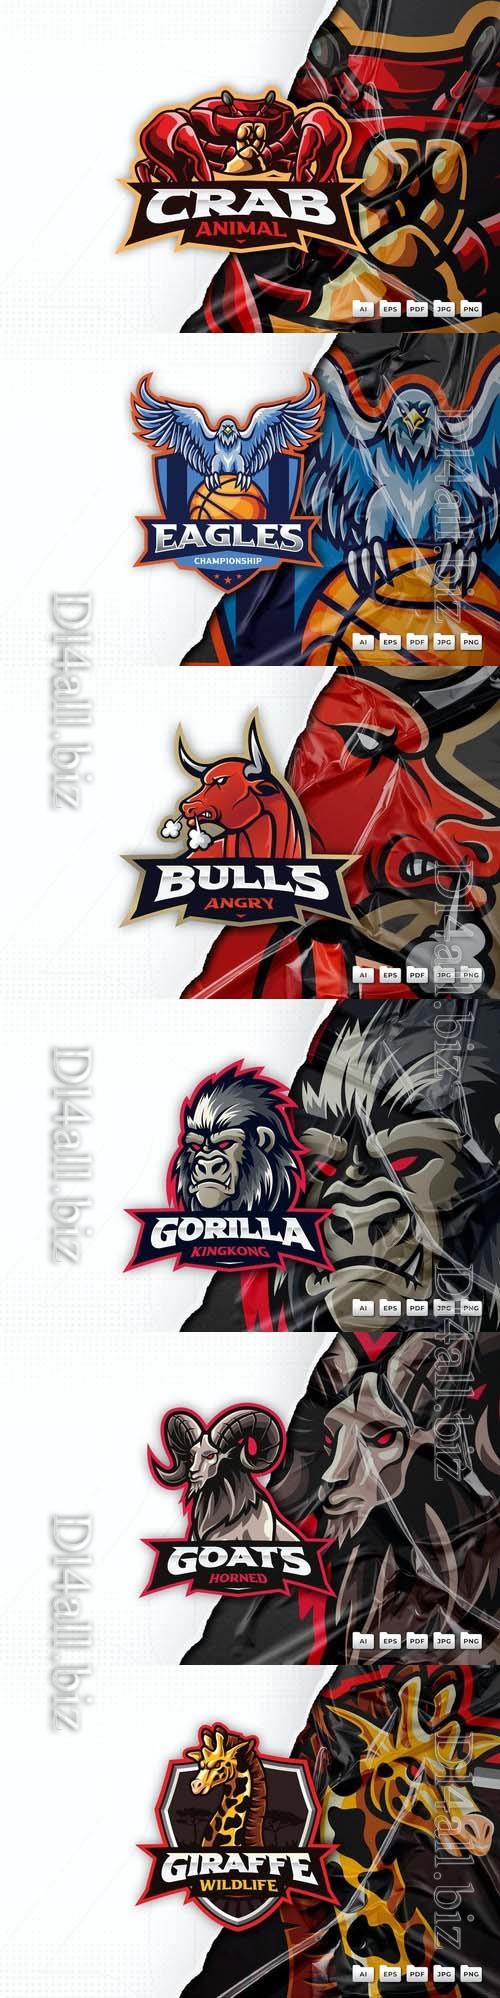 Gorilla, goat, giraffe, eagle, crab, bull, mascot logo design